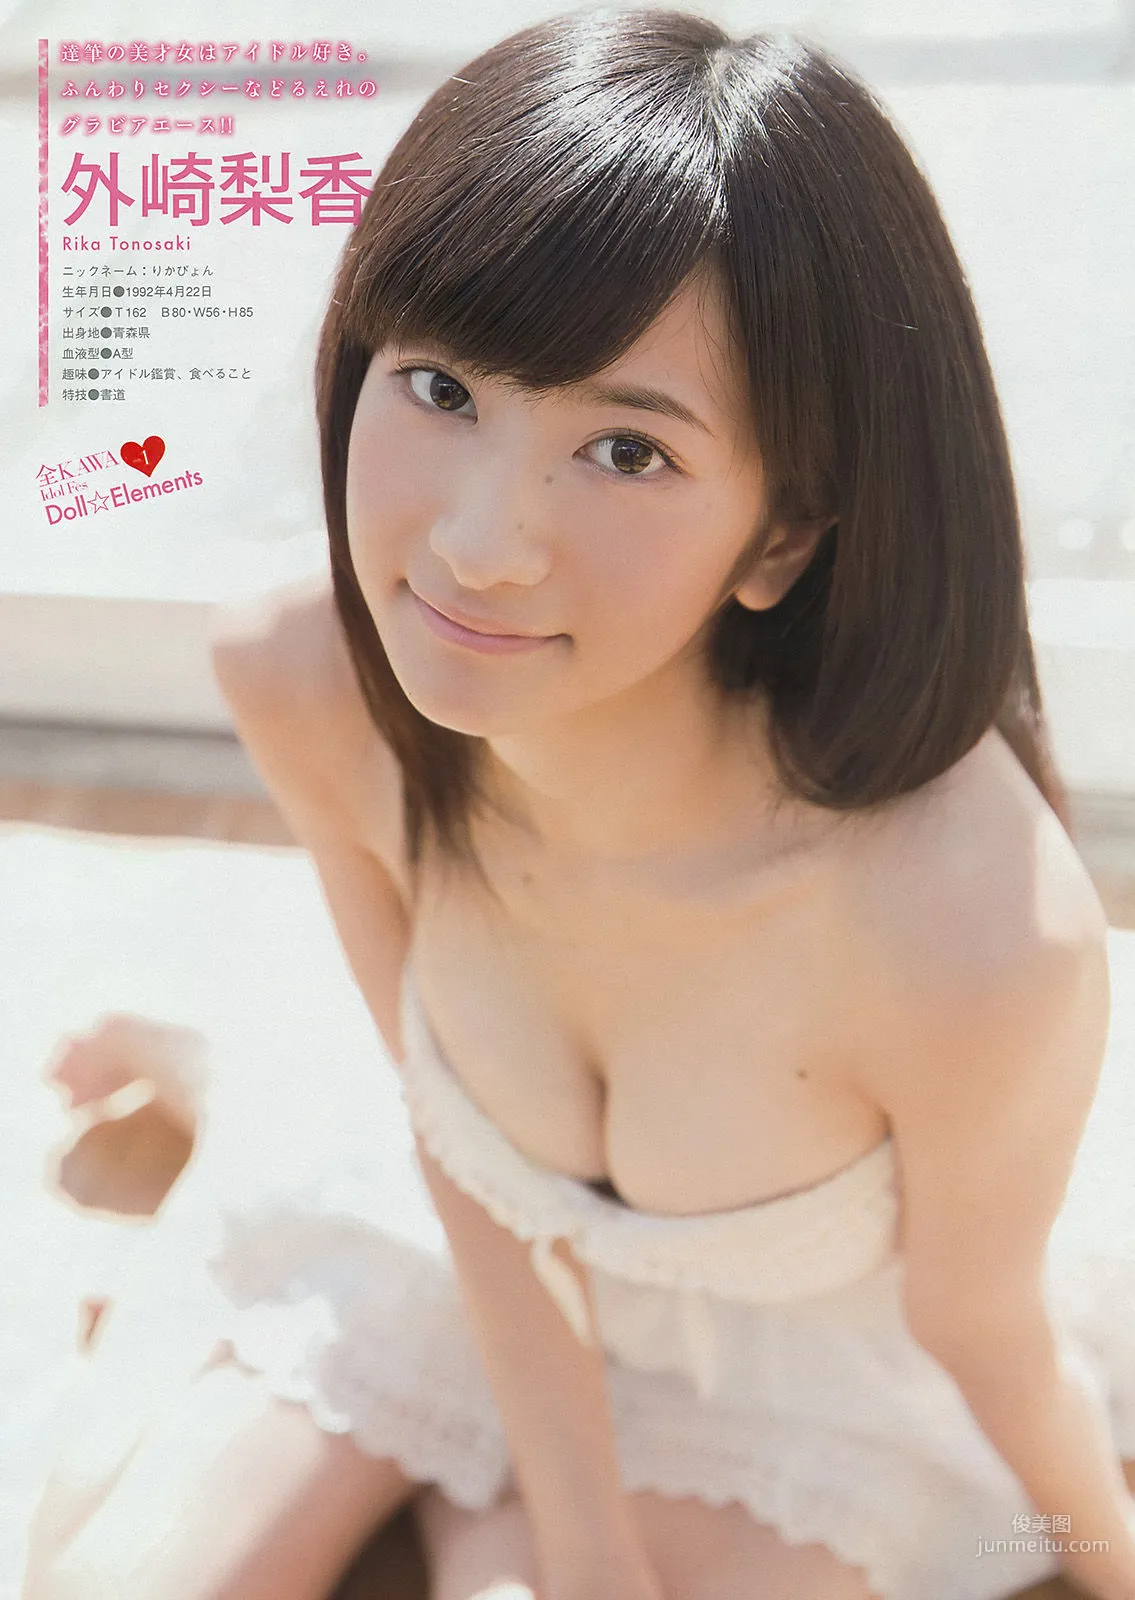 [Young Magazine] 都丸紗也華 Doll☆Elements 2014年No.49 写真杂志14